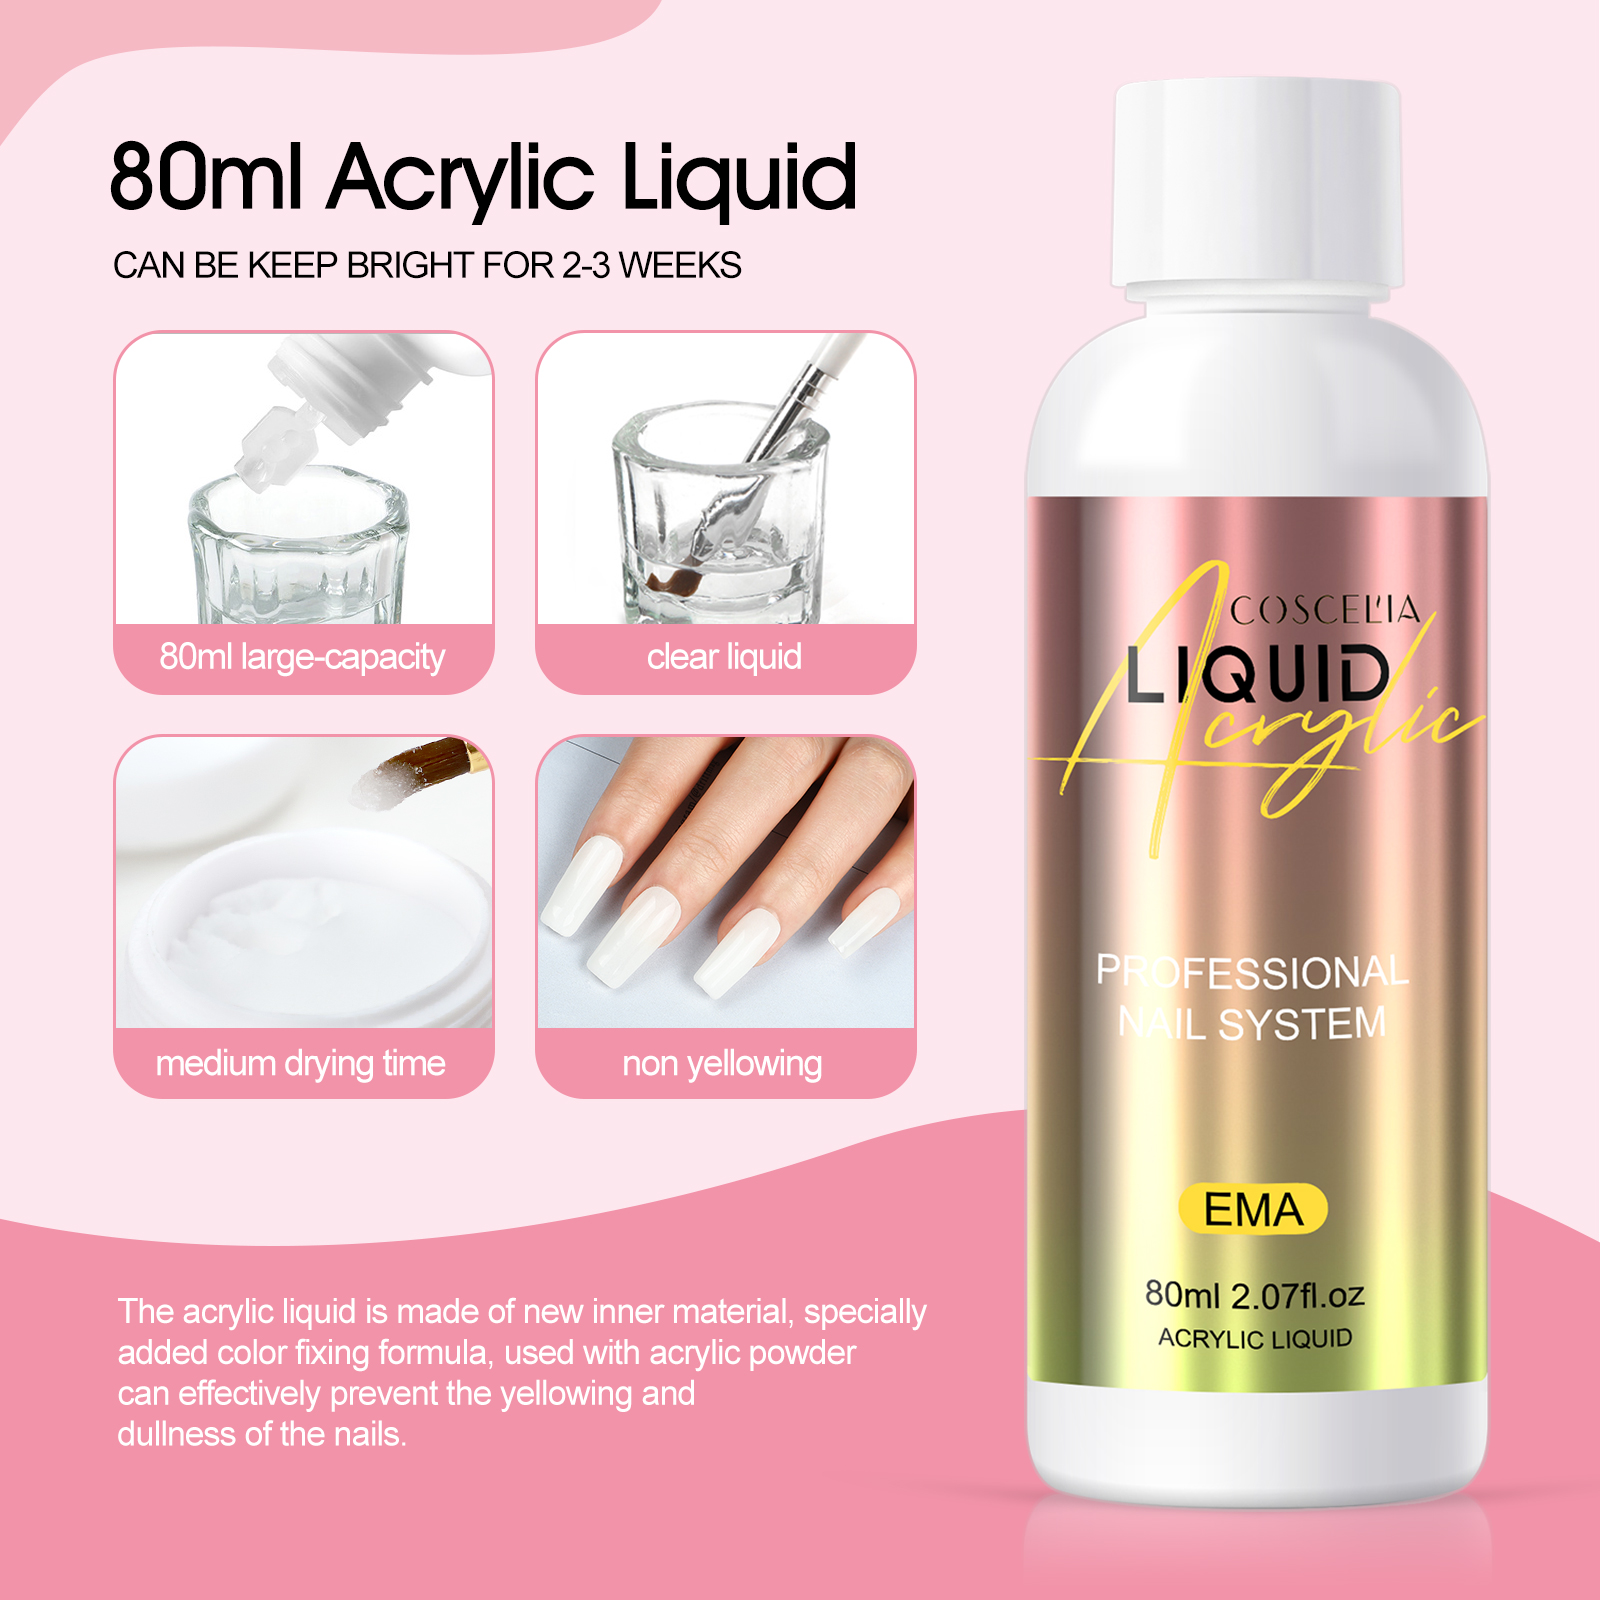 Coscelia Acrylic Nail Kit with U V Light and Drill Glitter Acrylic Powder and Liquid Set Beauty ?Gifts - image 5 of 9